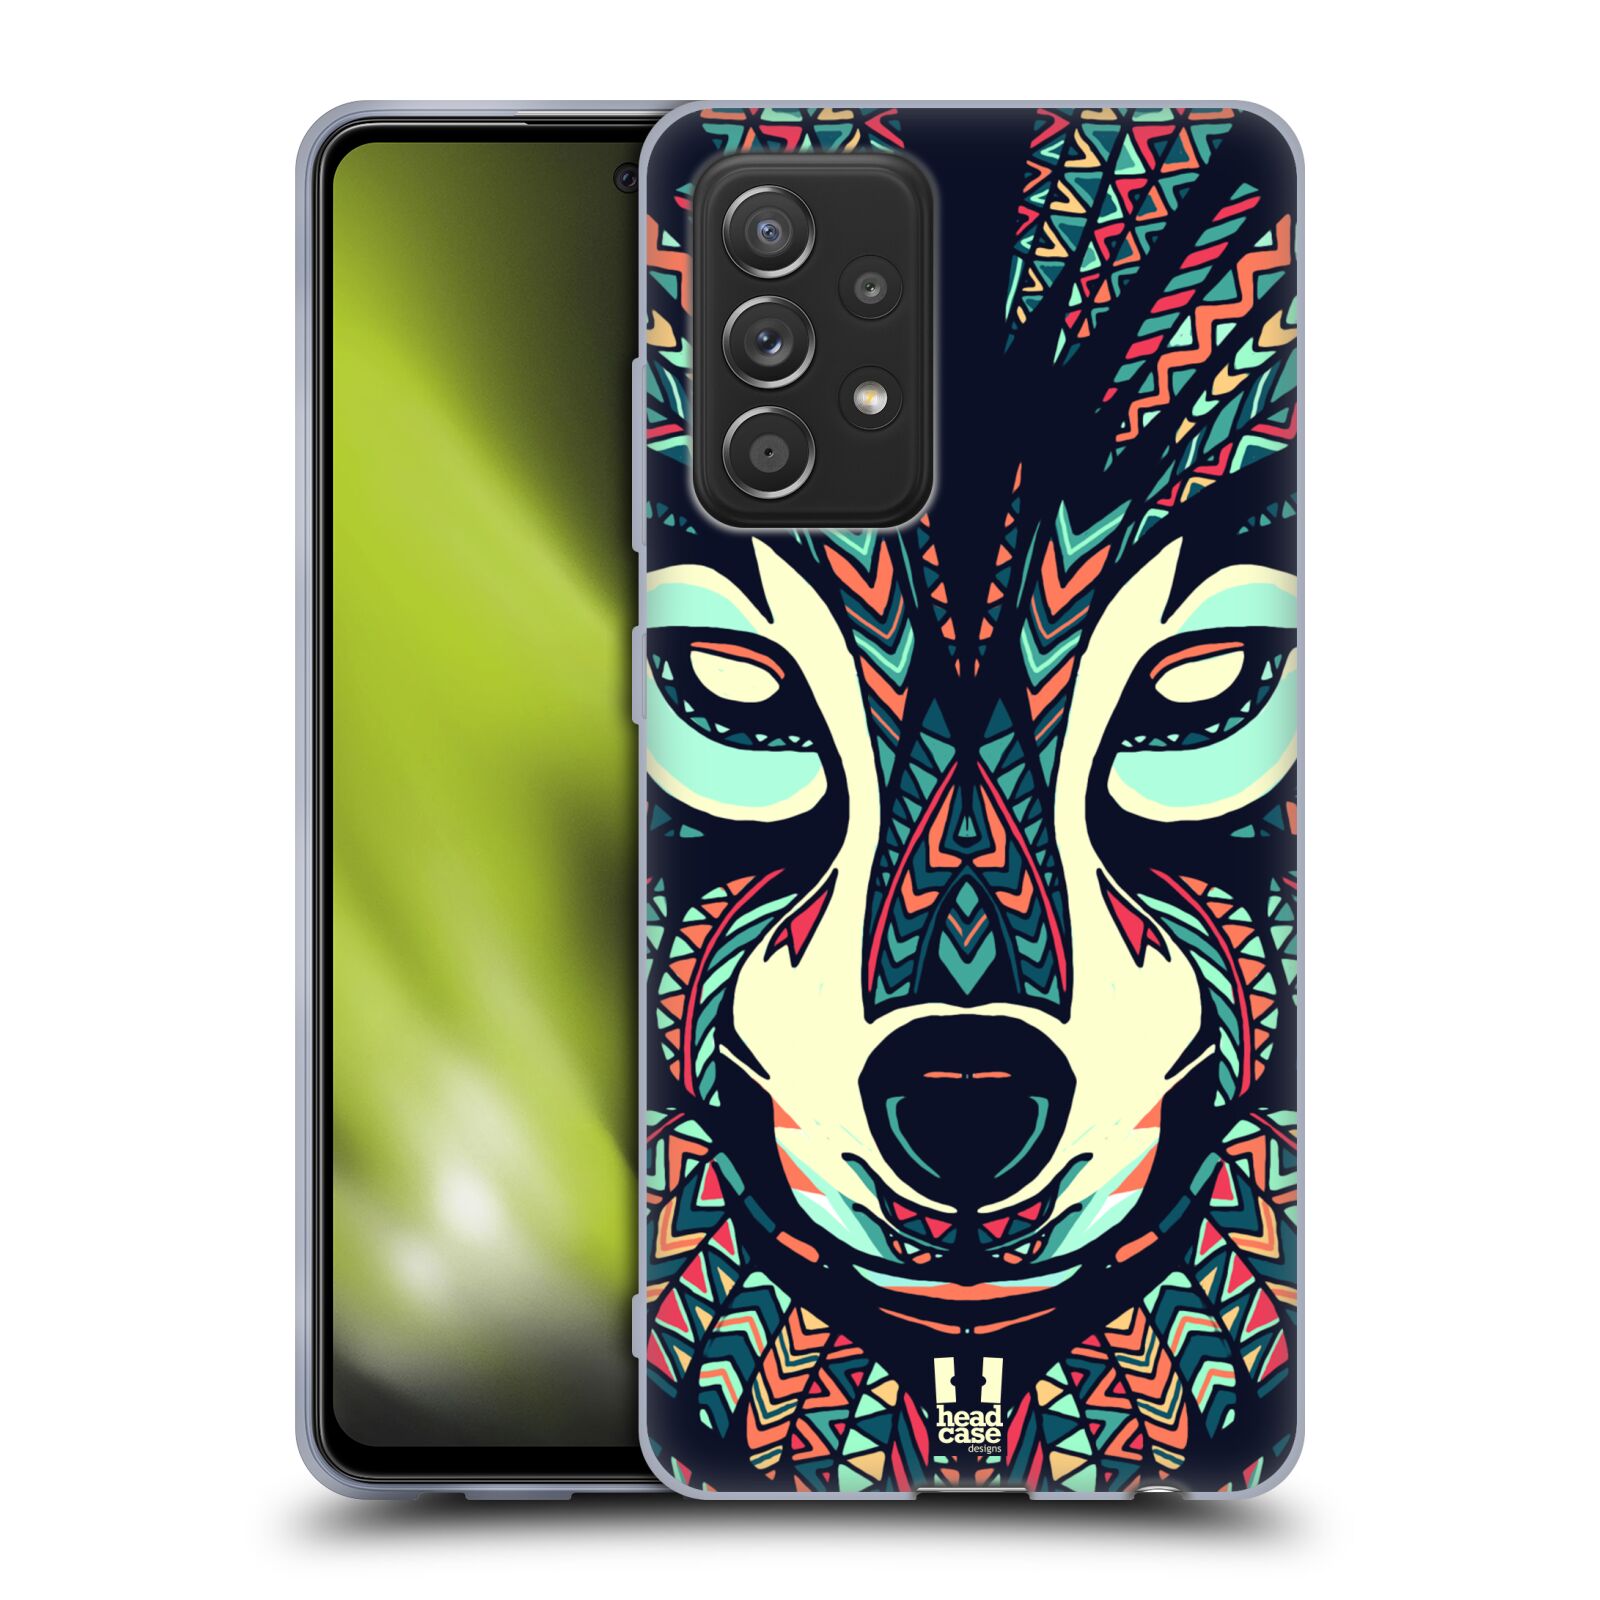 Plastový obal HEAD CASE na mobil Samsung Galaxy A52 / A52 5G / A52s 5G vzor Aztécký motiv zvíře 3 vlk